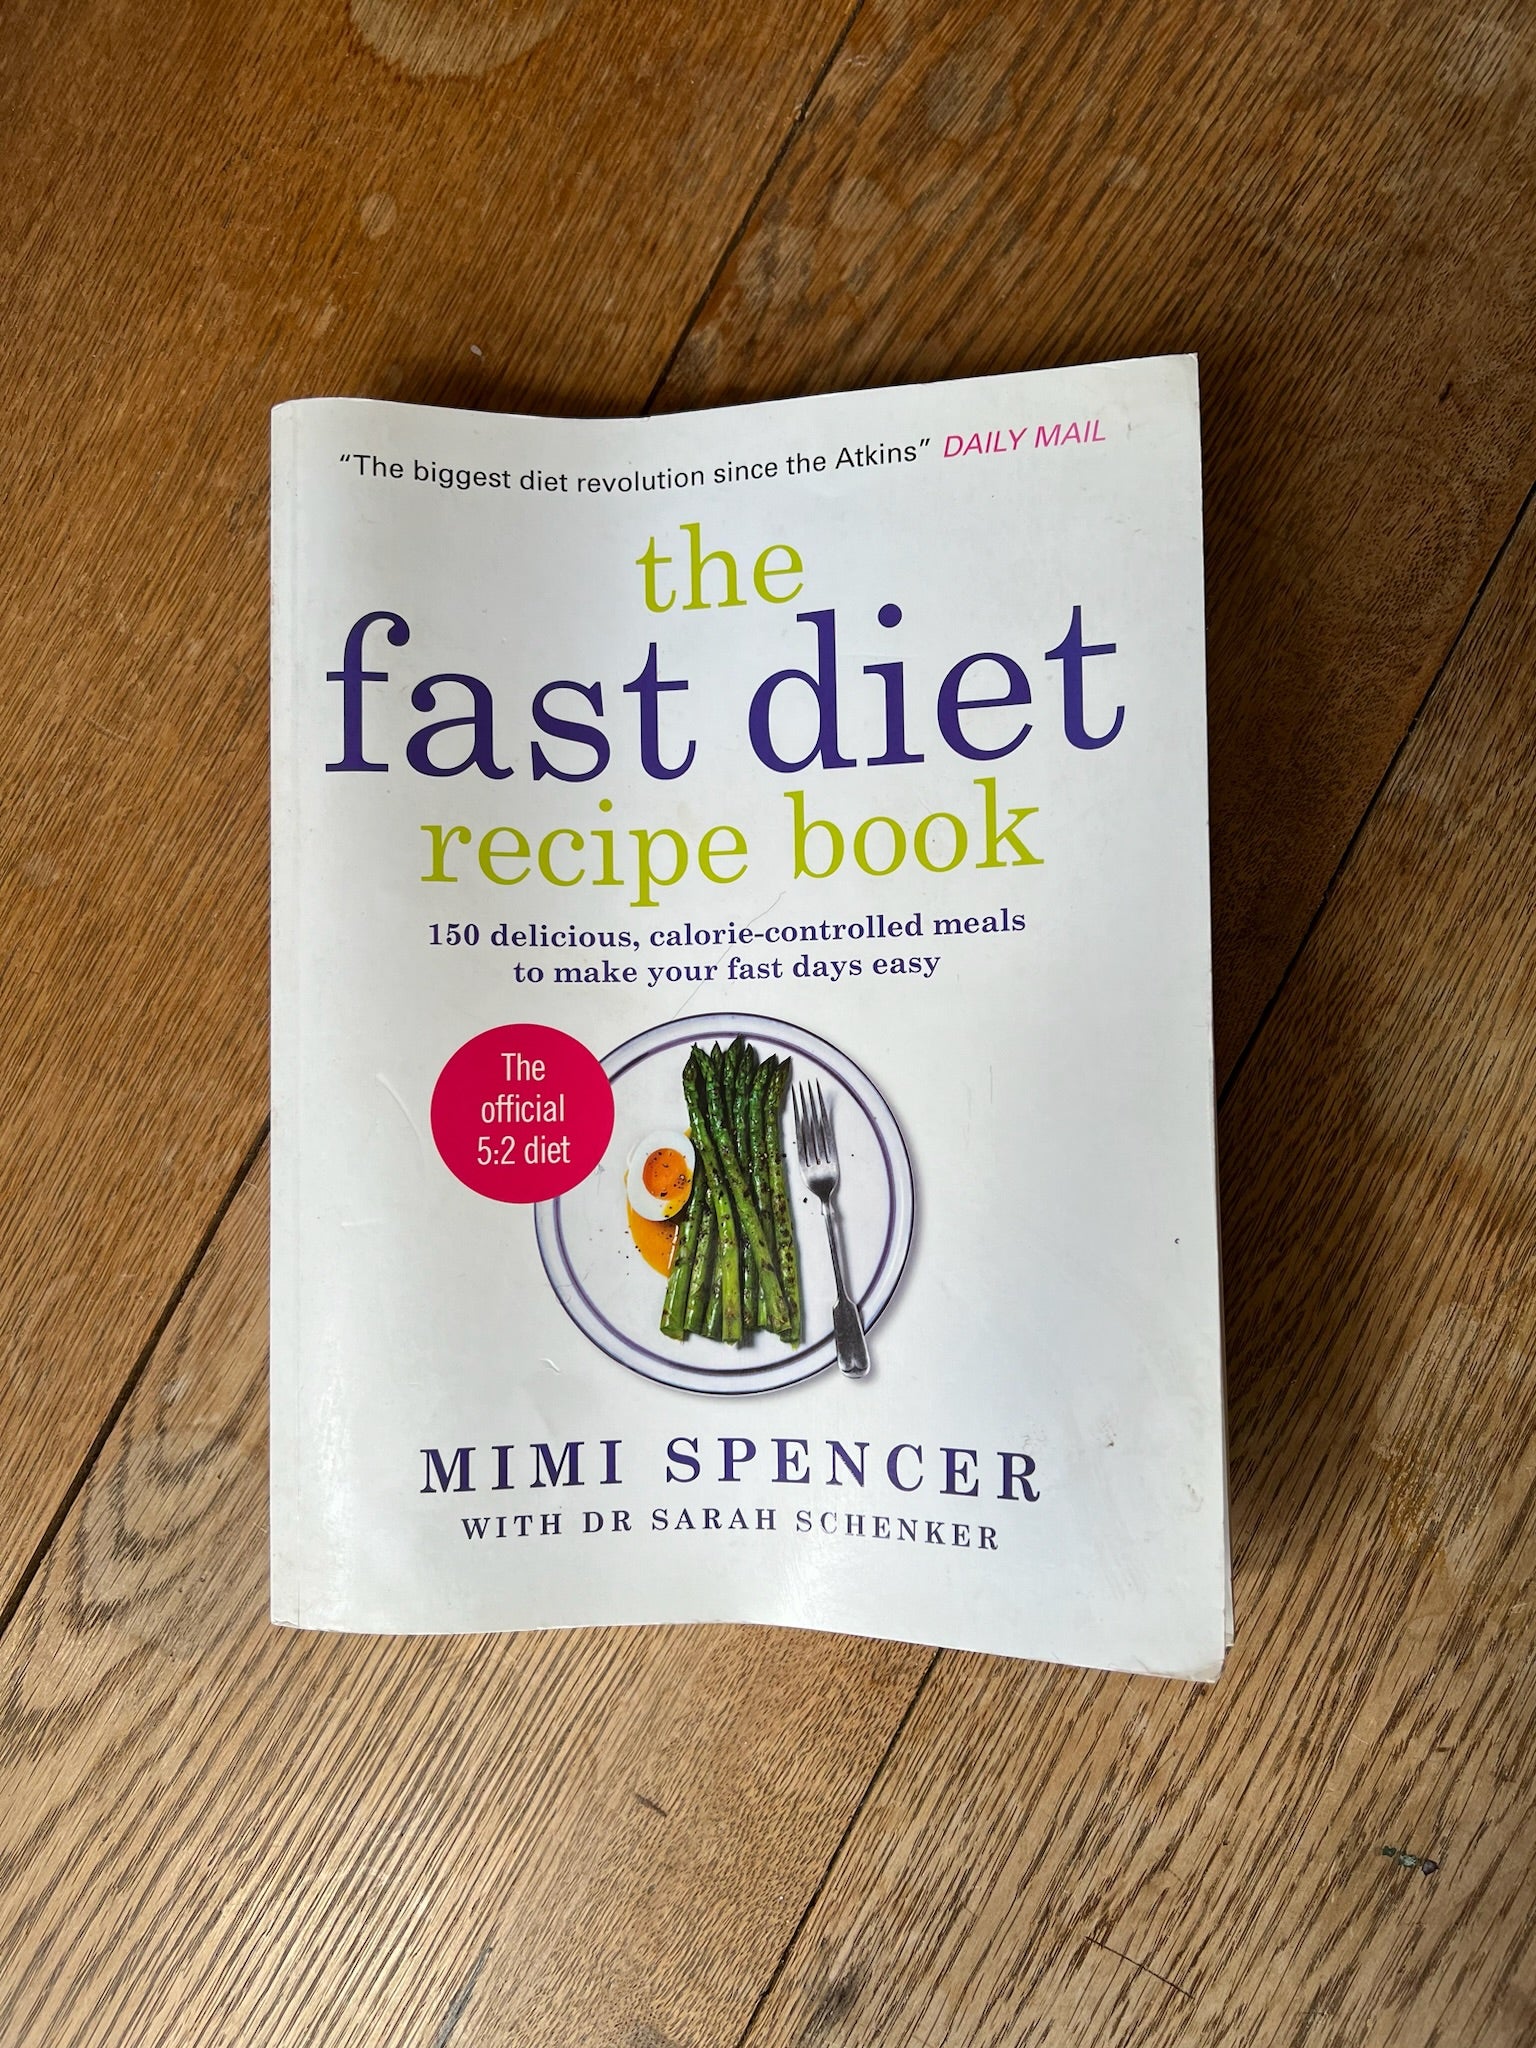 “THE FAST DIET RECIPE BOOK’ Mimi Spencer